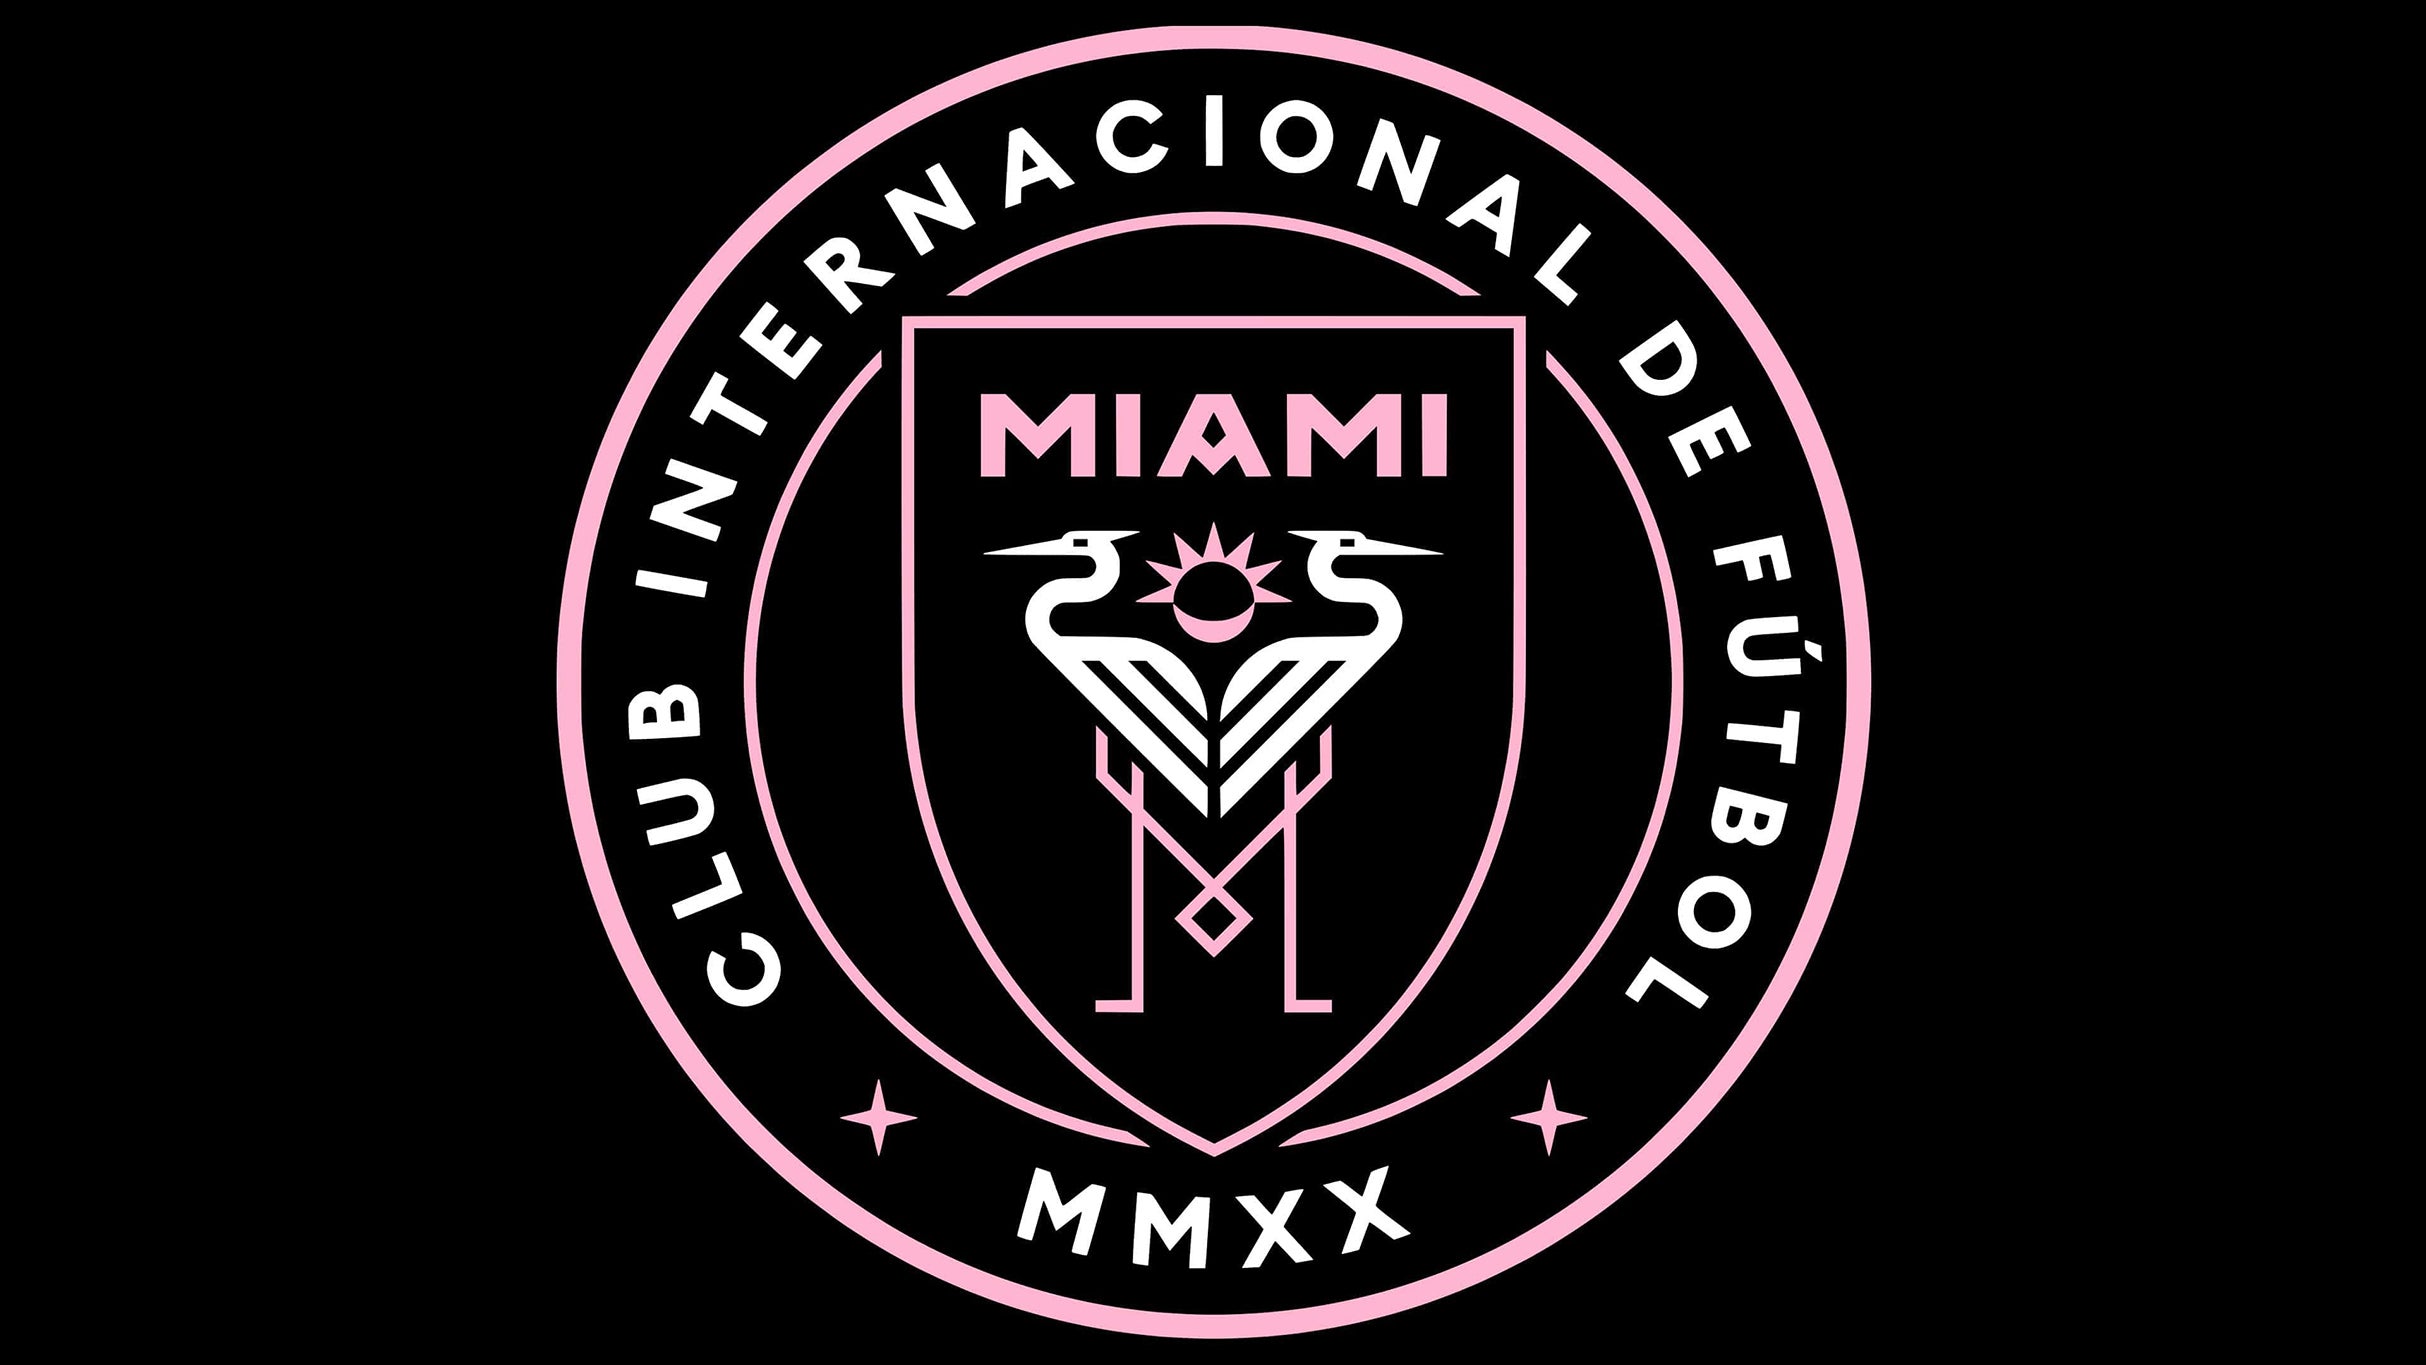 Inter Miami CF v New England Revolution in Fort Lauderdale promo photo for IMCF Season presale offer code